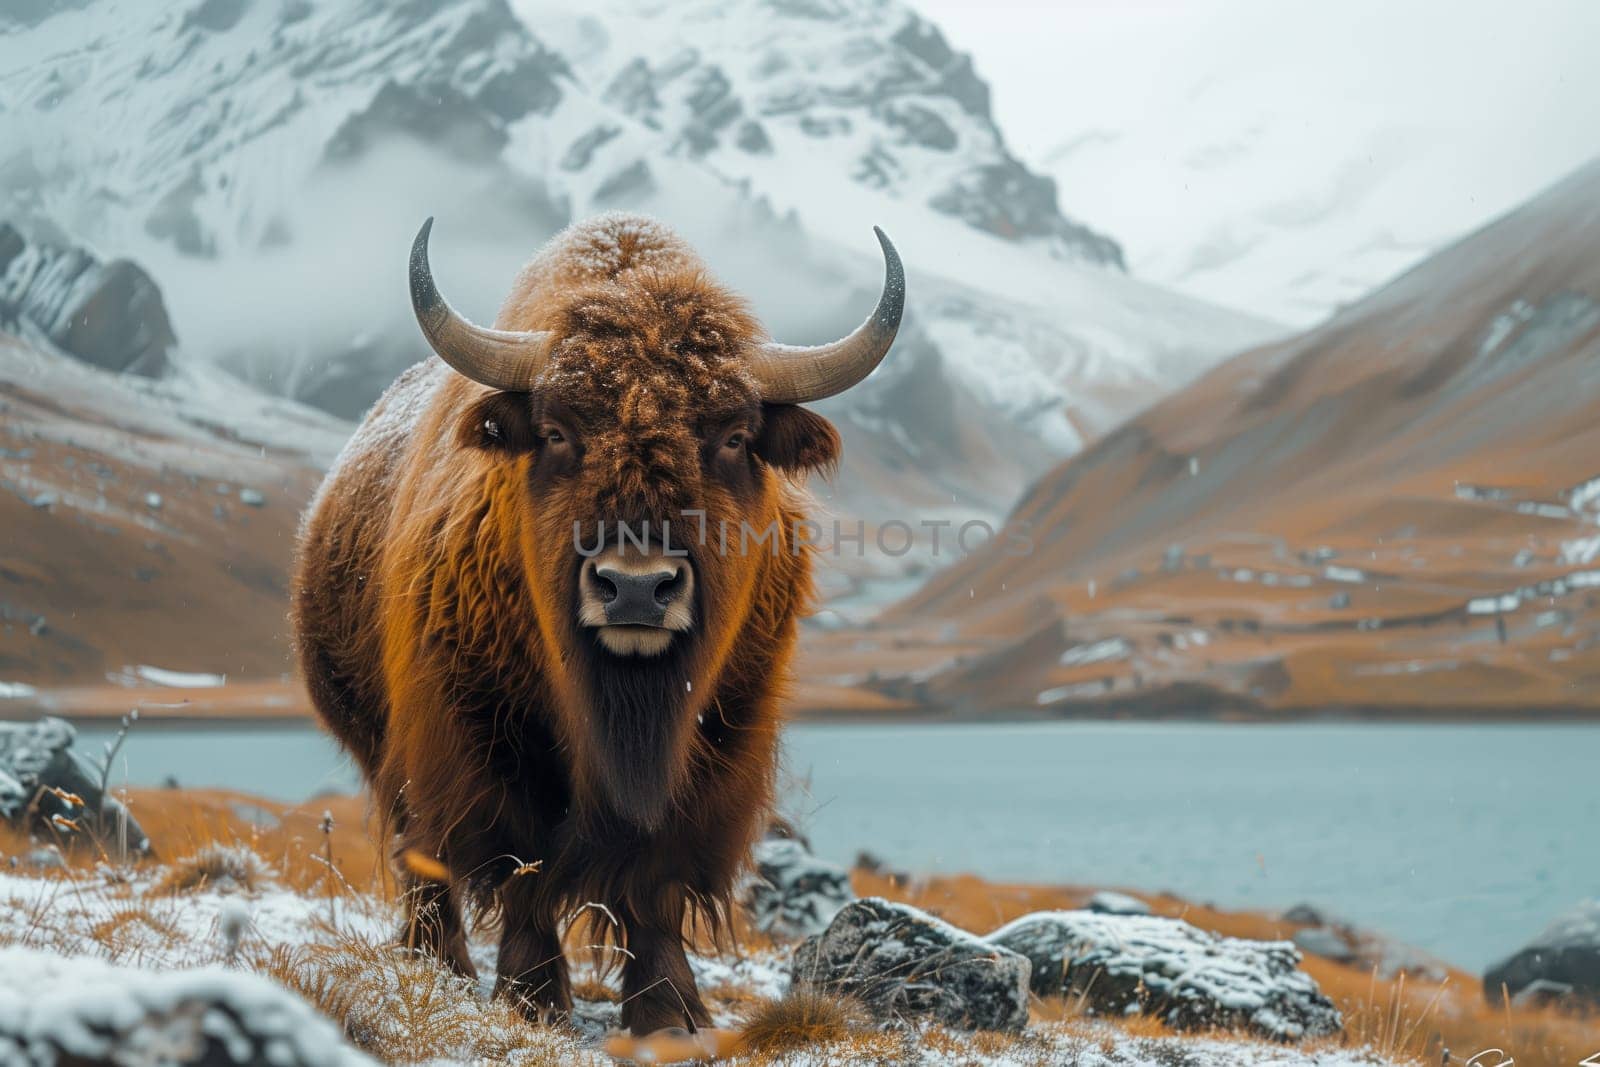 Bison near mountain lake, horned terrestrial animal in snowy landscape by richwolf